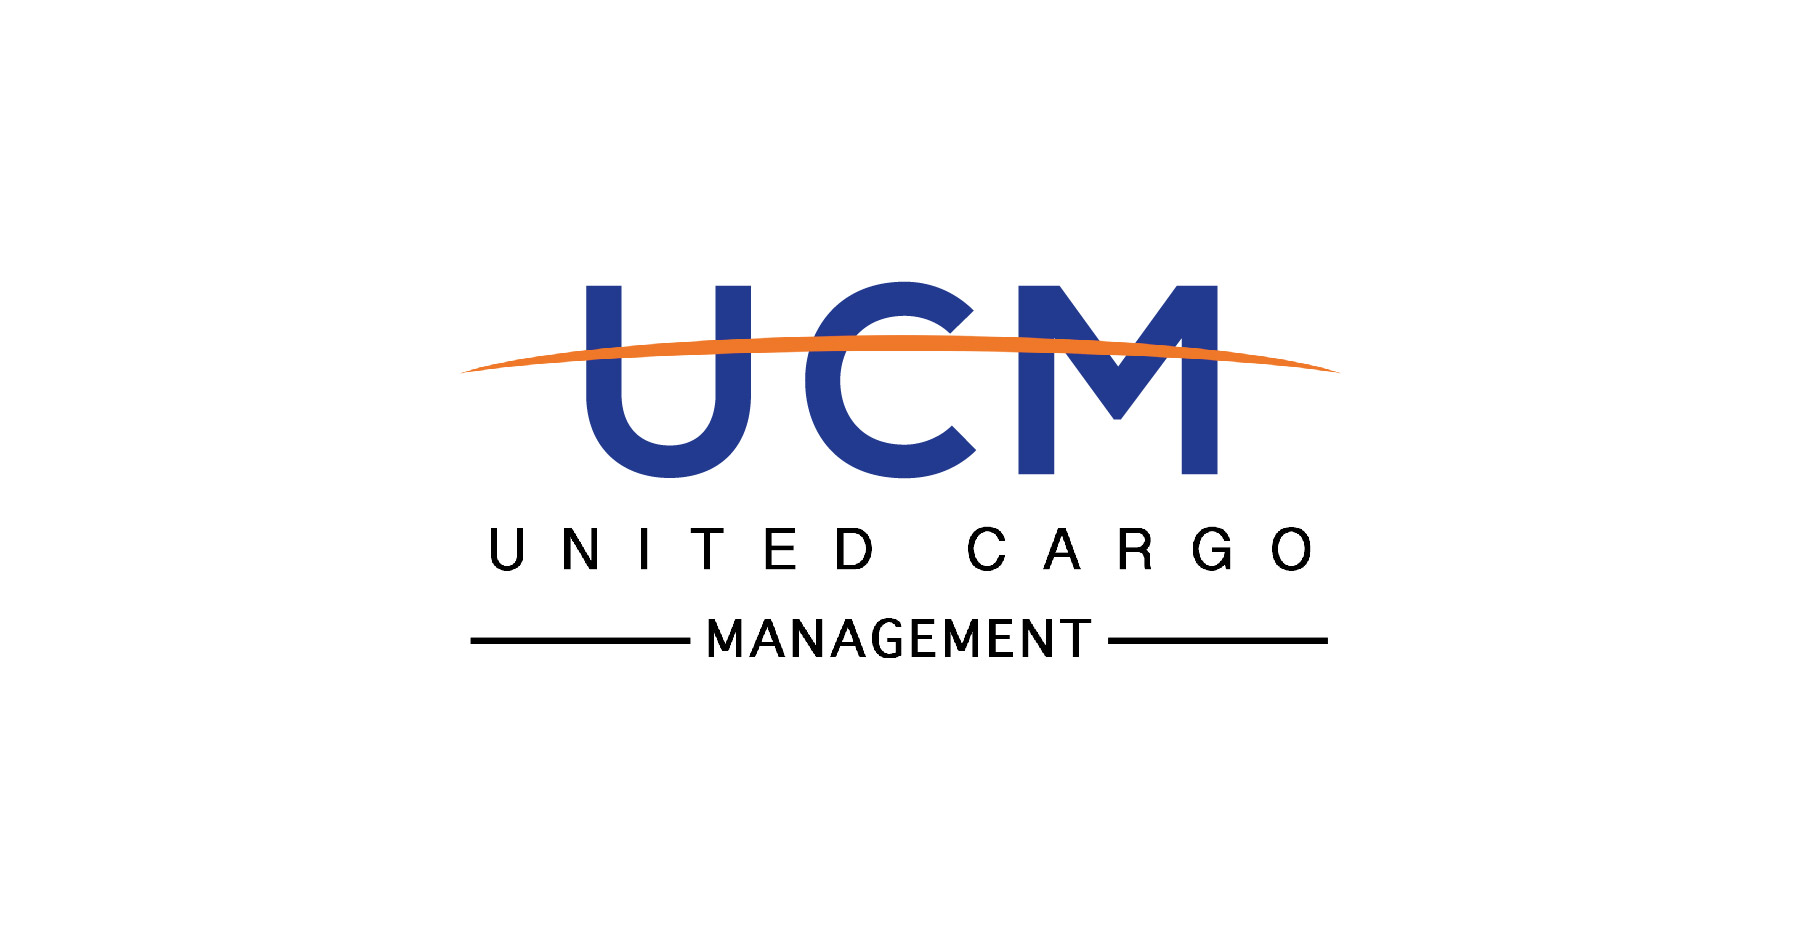 Nicolette Berrouët - Import Manager - United Cargo Management